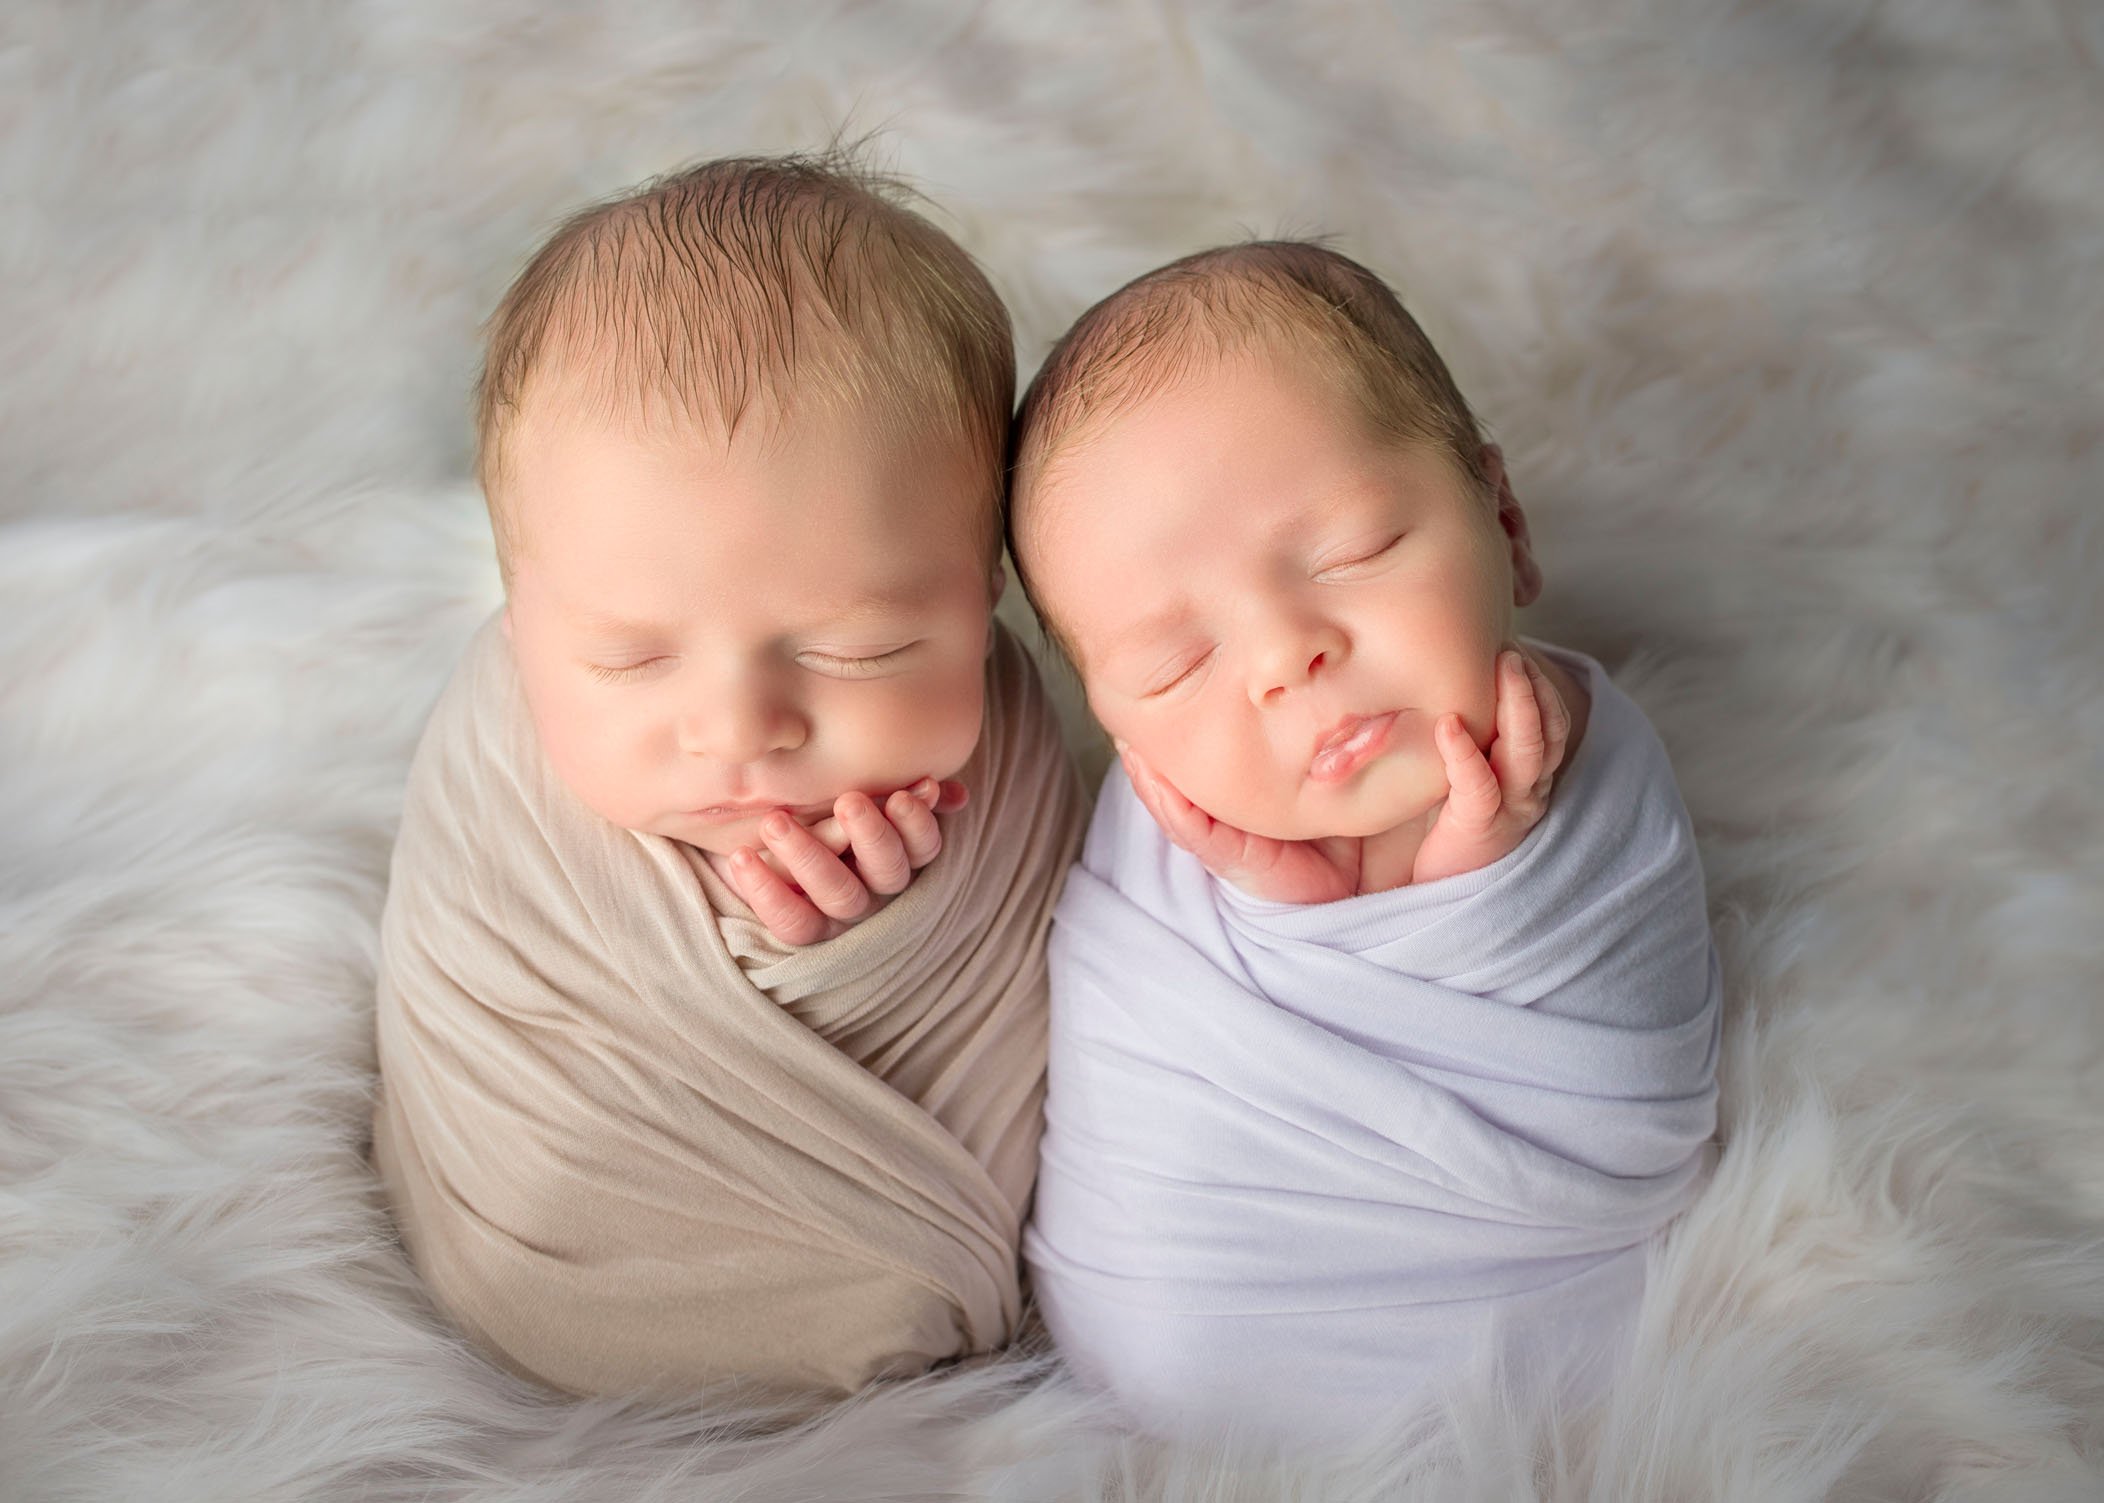 twin newborns sleeping in potato sack pose together